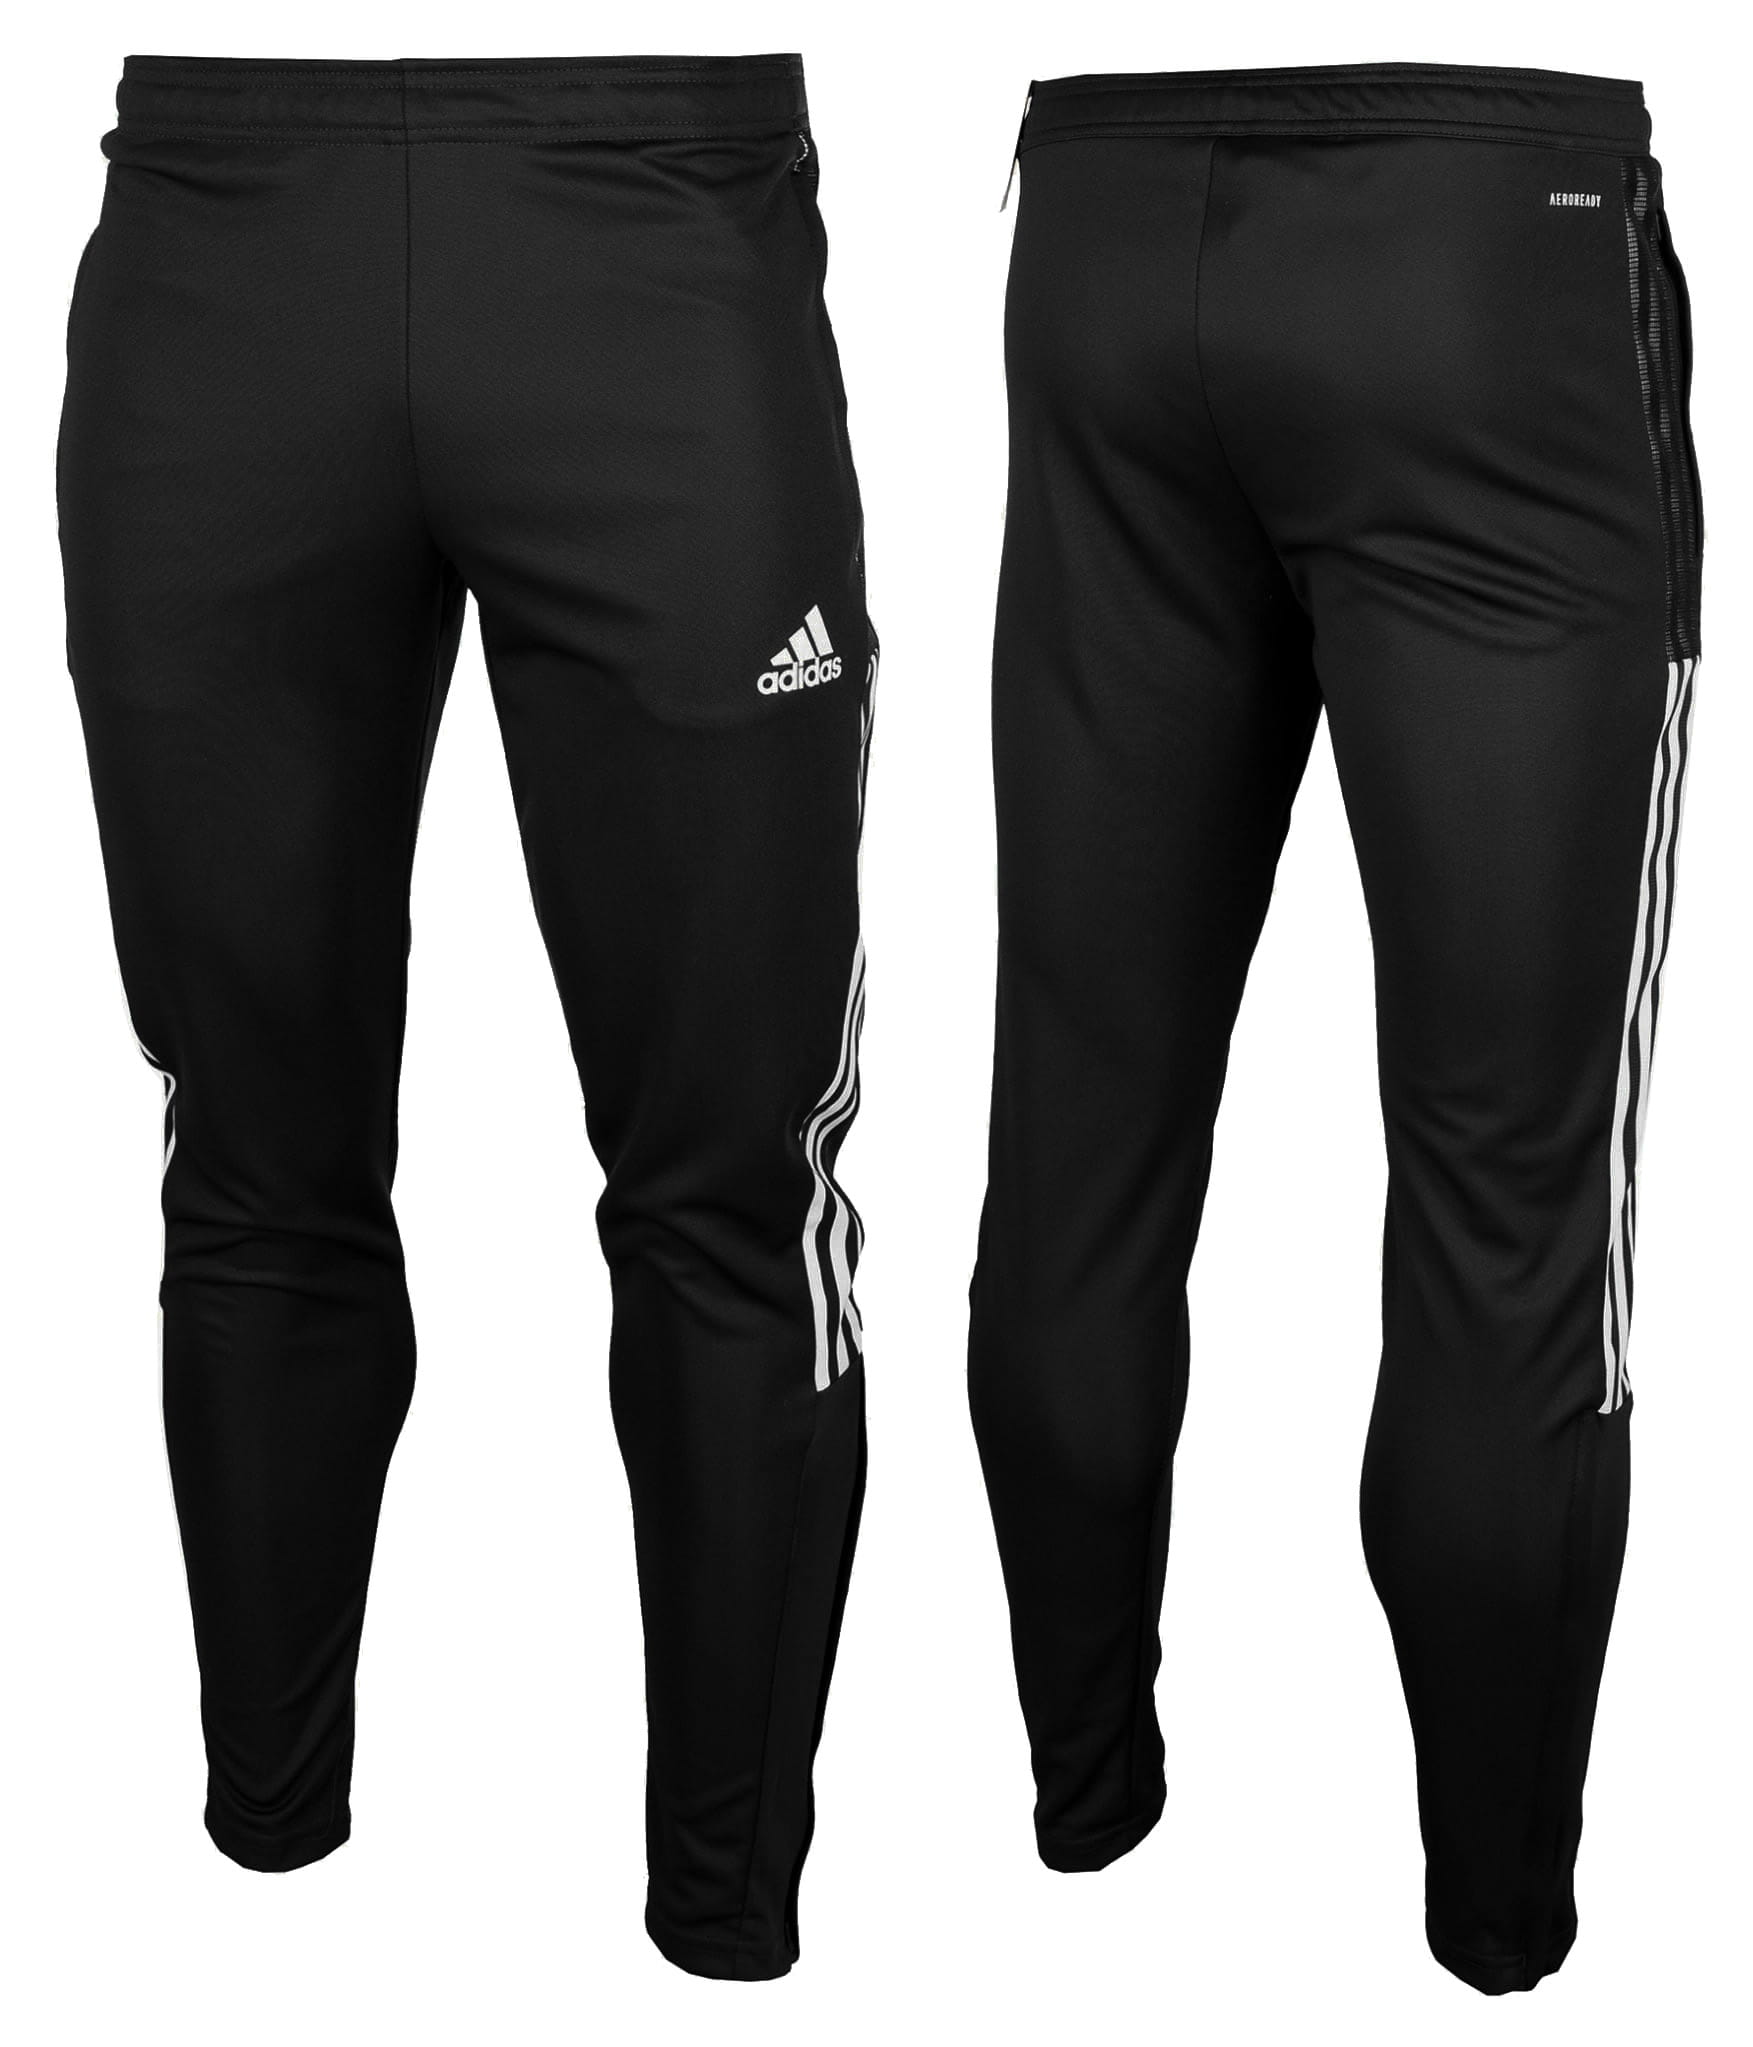 Pantalones fútbol hombre Adidas Tiro 21 Track - GH7305 - negro - depor8